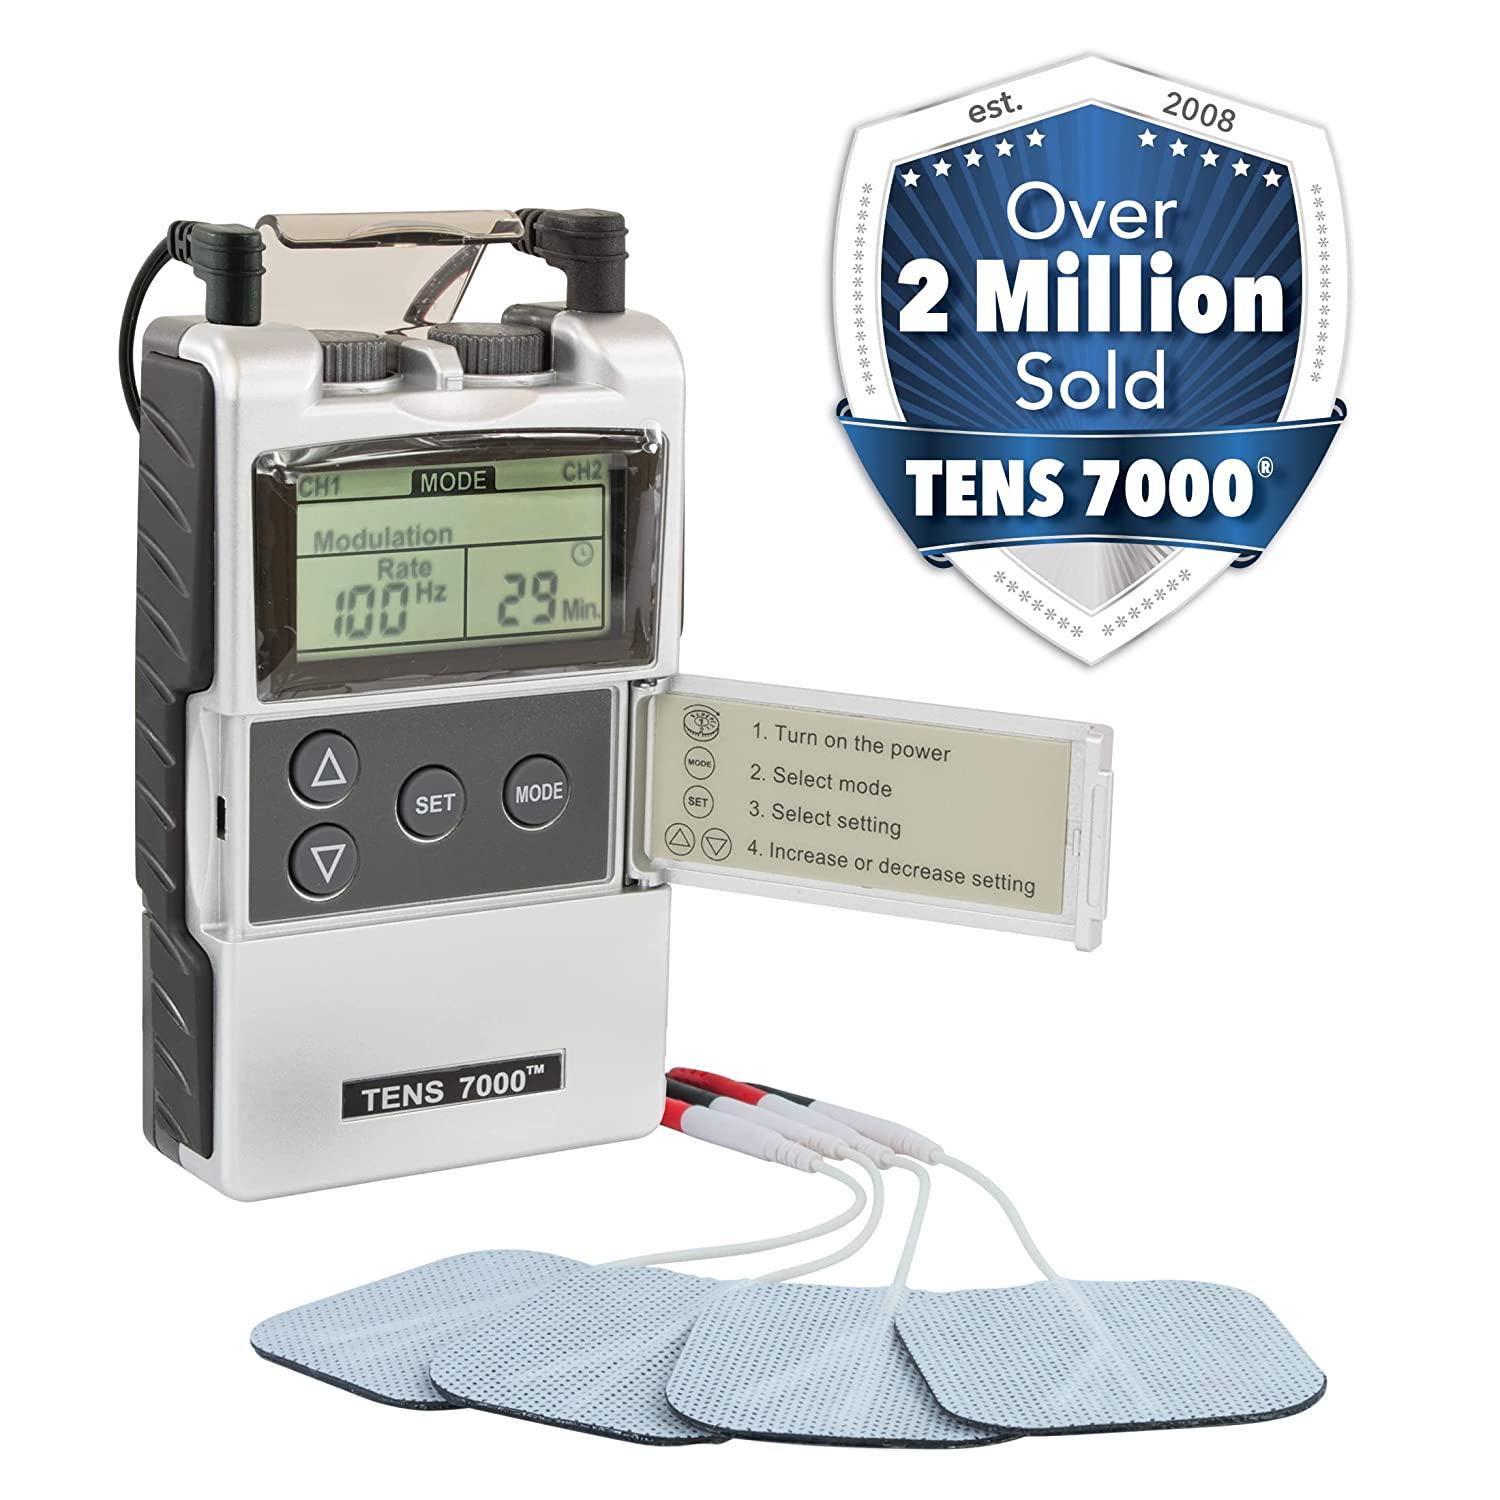 TENS 7000 Official TENS Unit Replacement Pads - 48 Pack, Premium